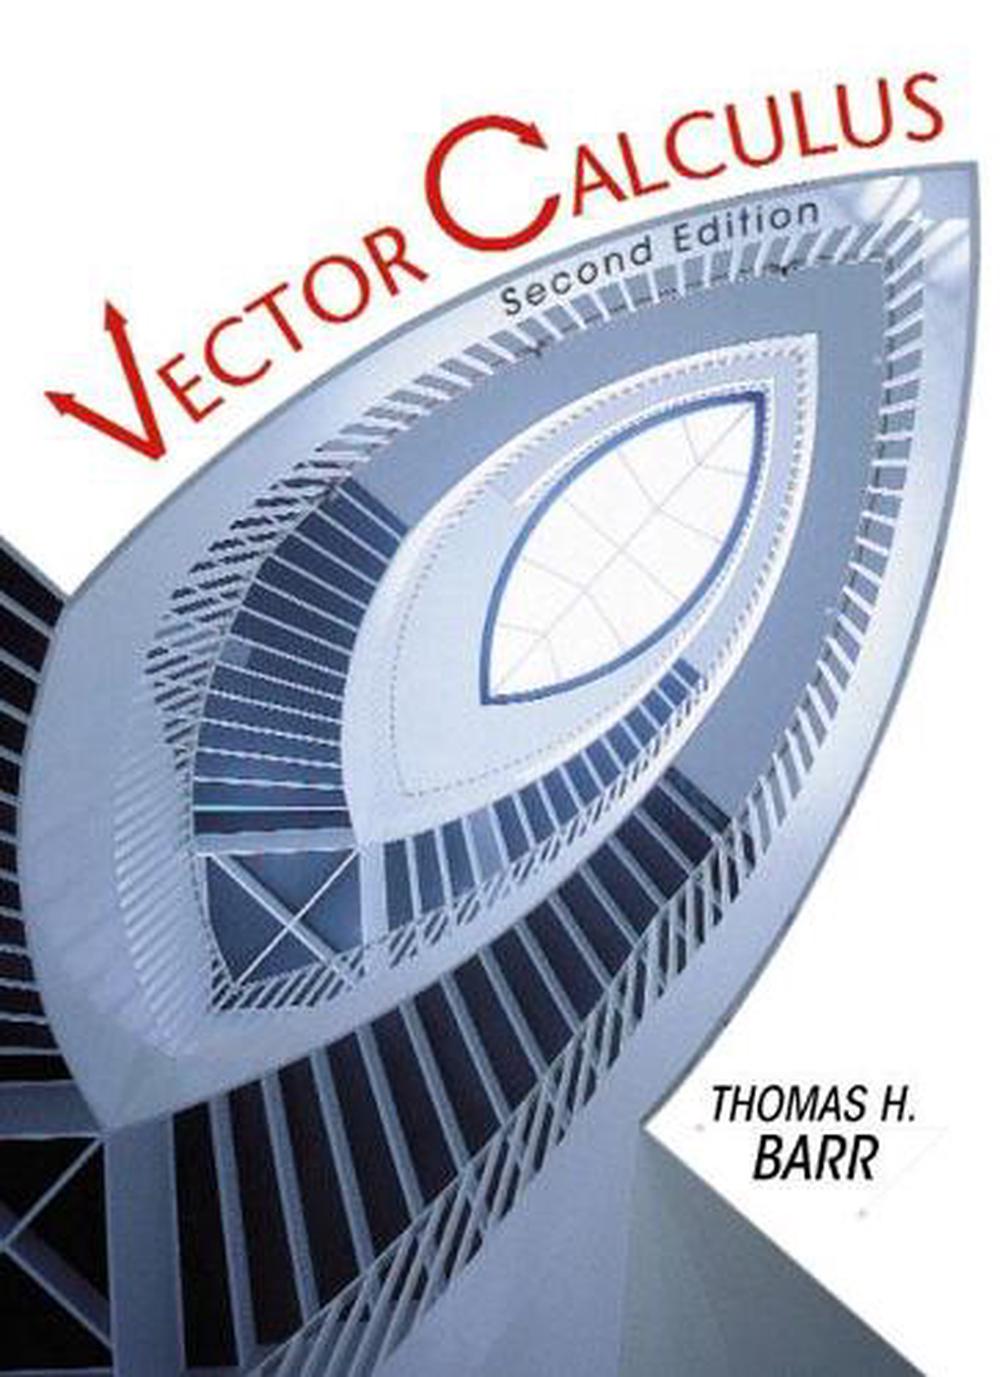 vector calculus barr pdf